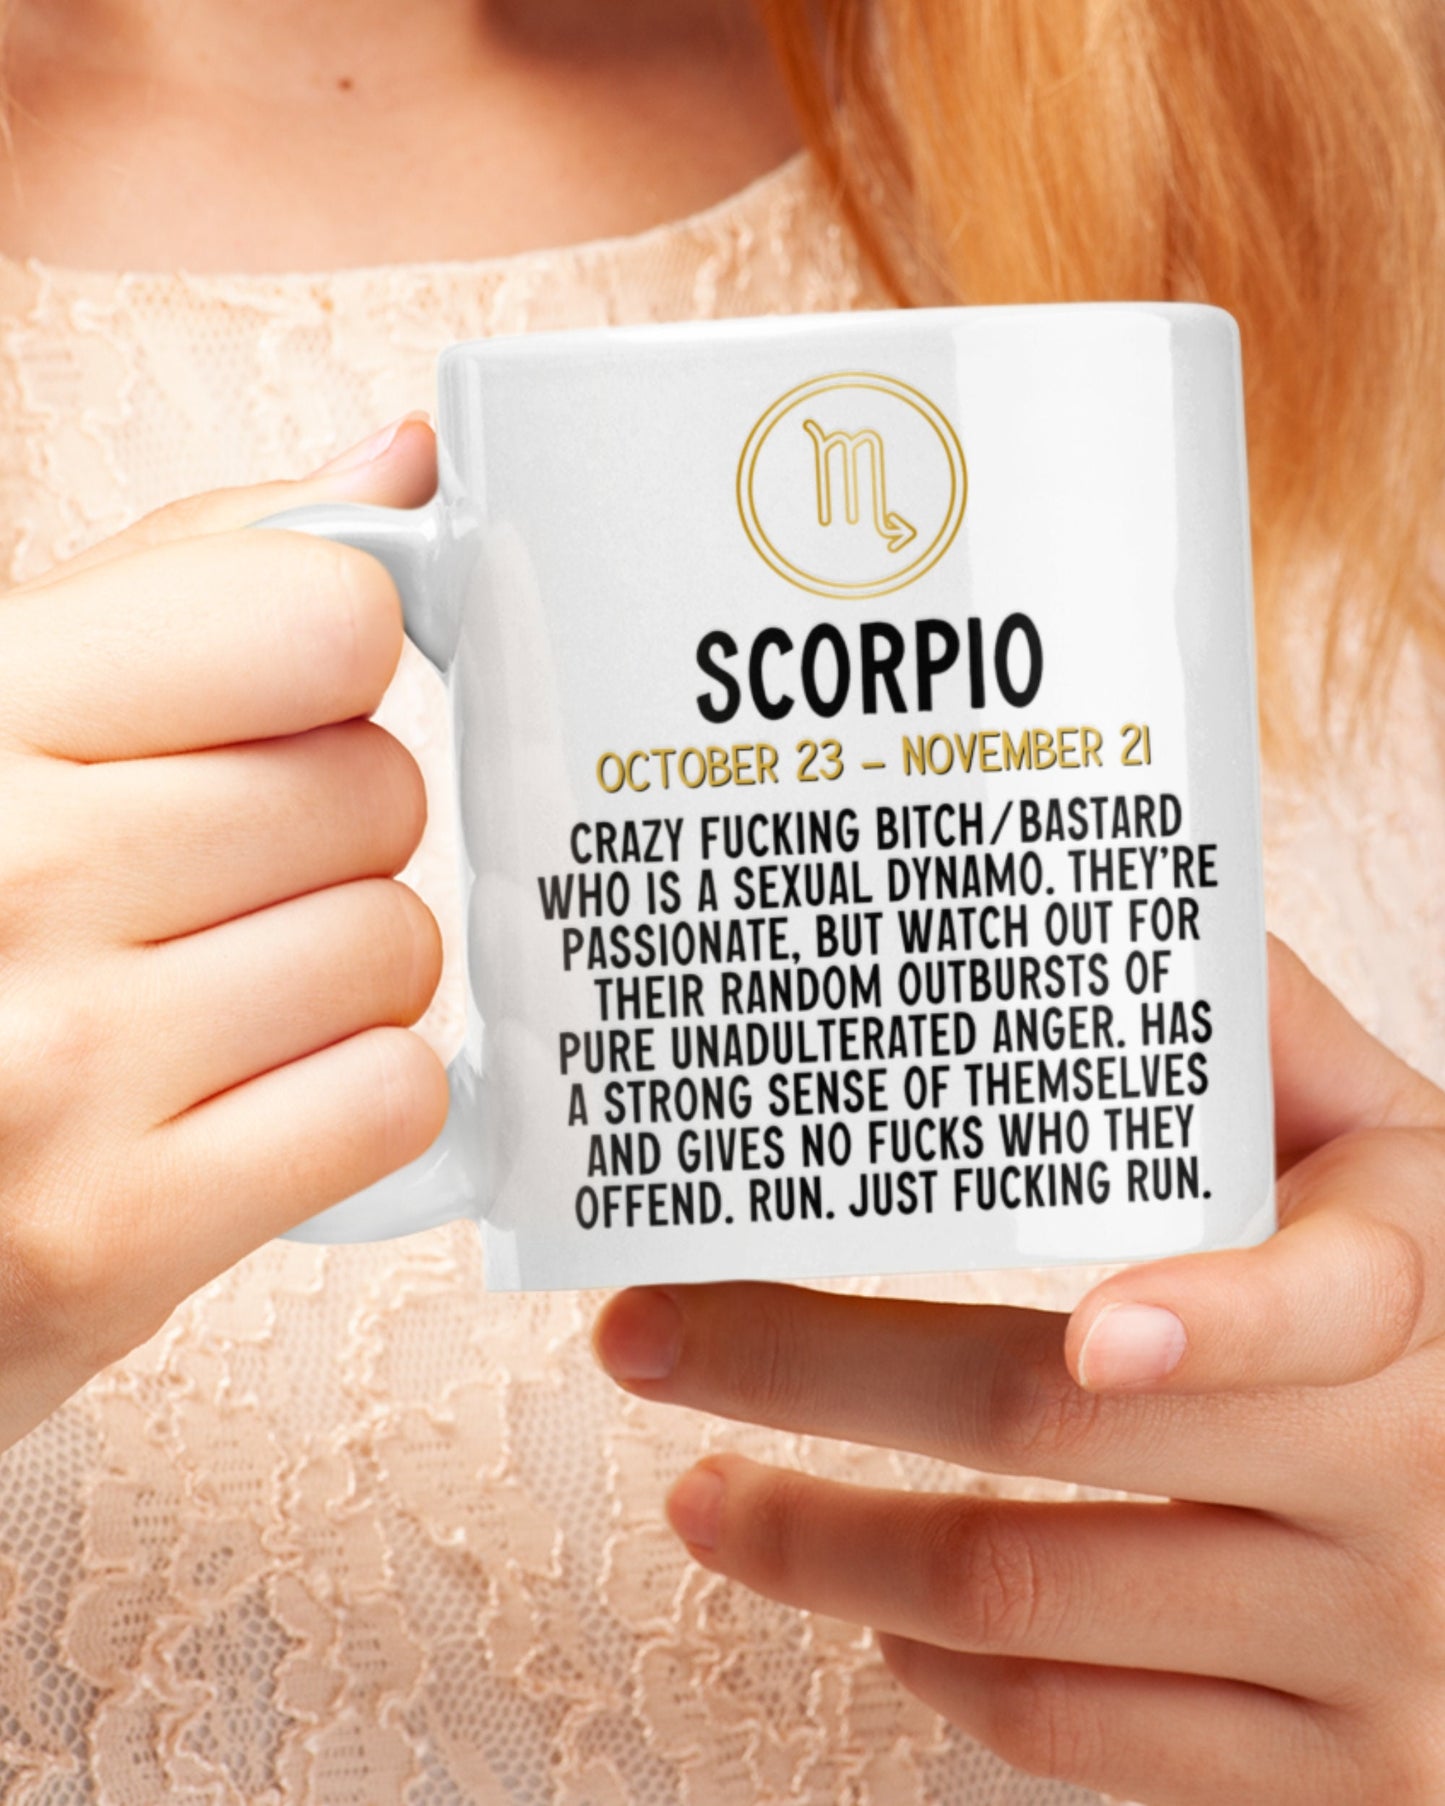 Scorpio star sign, Scorpio mug, Scorpio gift ideas, Scorpio Coffee Mug, Horoscope Gift Ideas, star sign mug, swear coffee mug, profanity mug